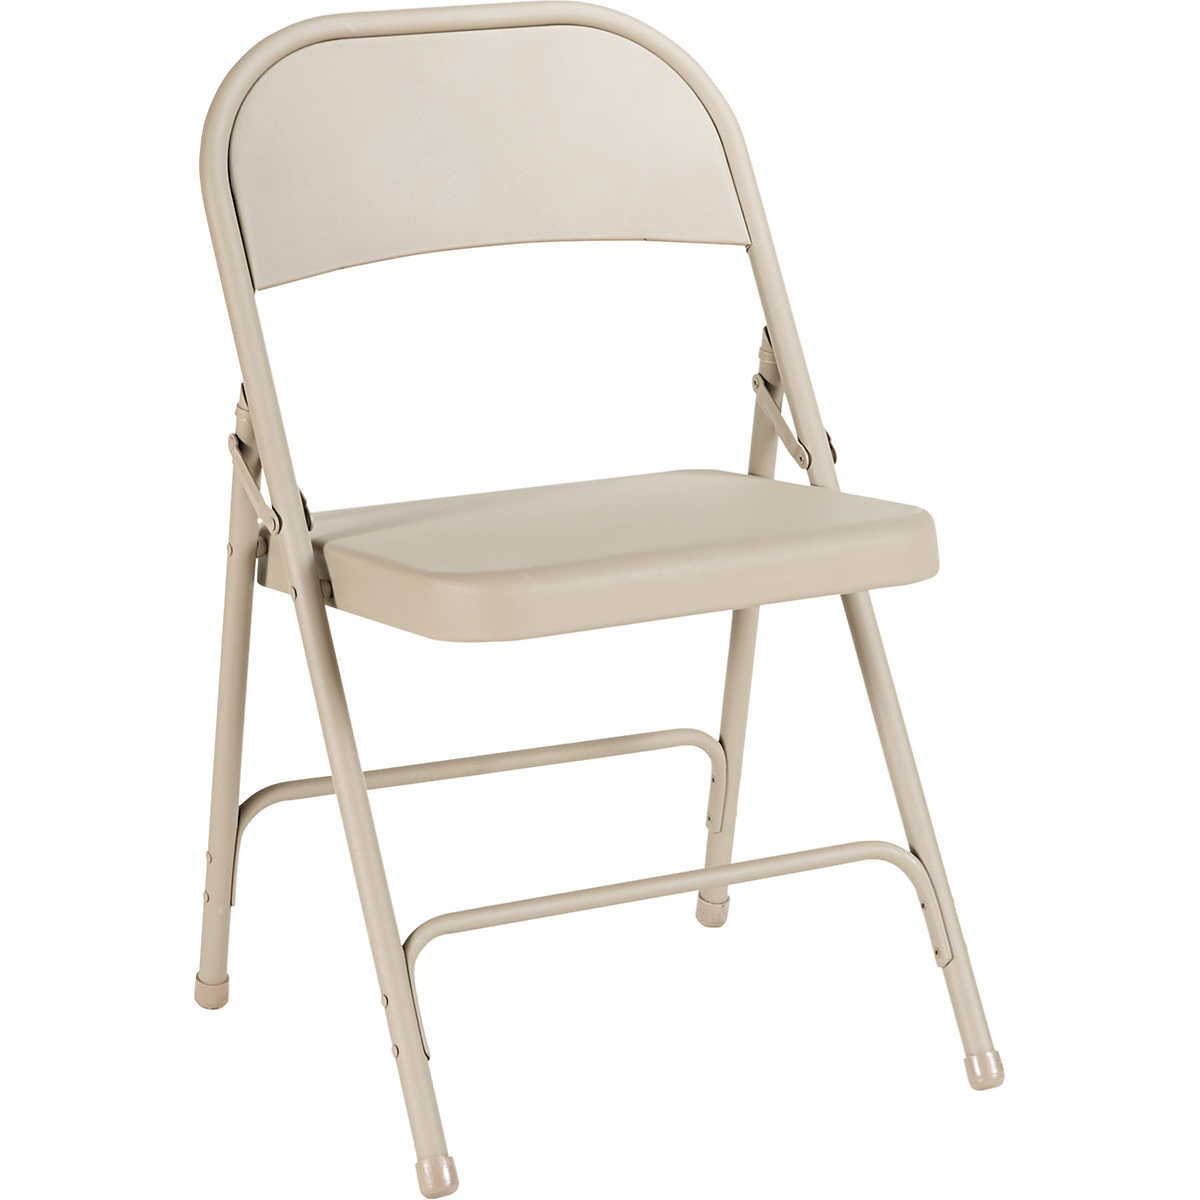 Light Gray New Alera FC96G Steel Folding Chair w/ Two-Brace Support Padded Seat 